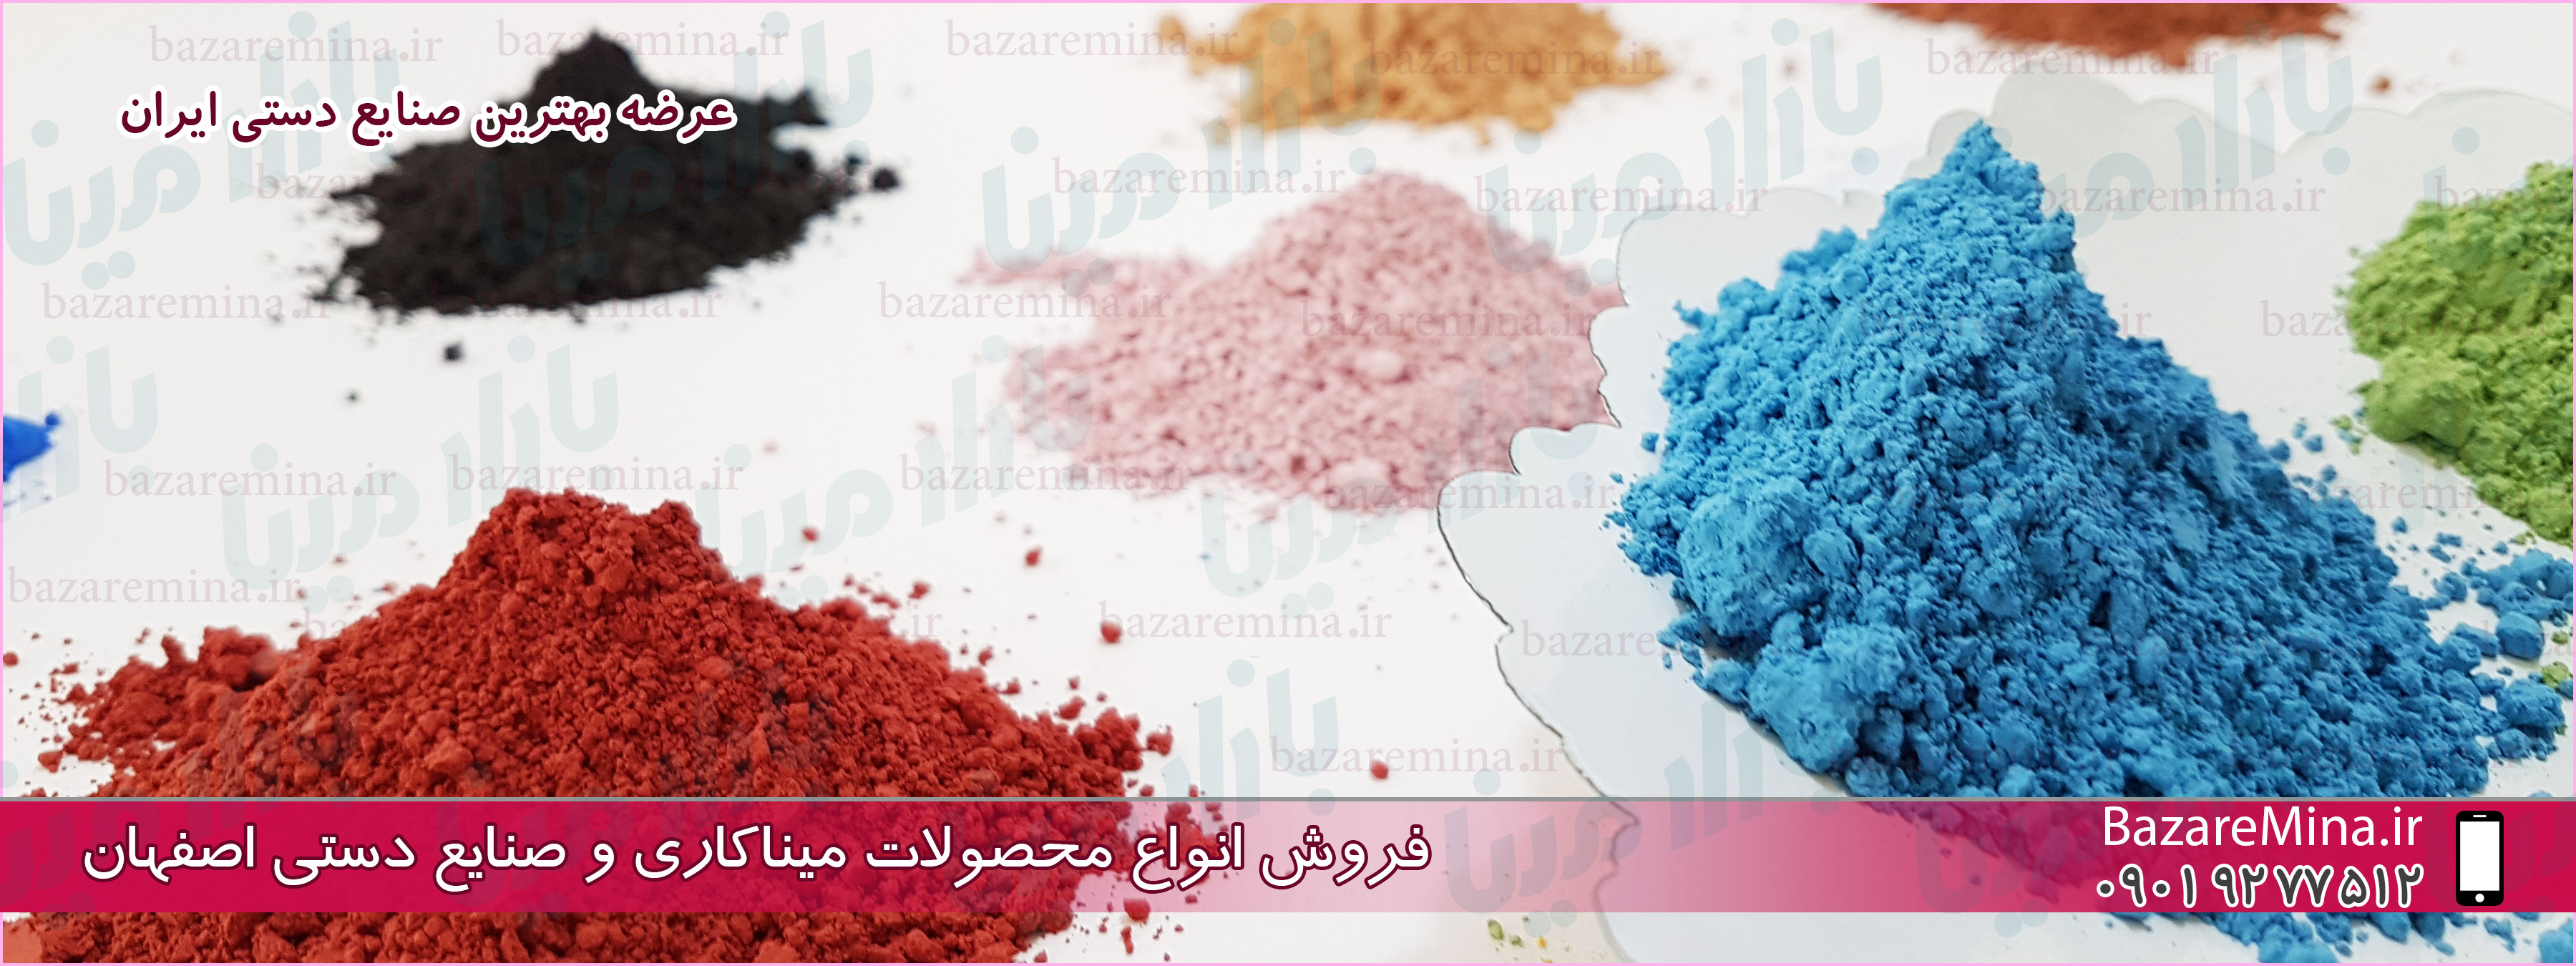 فروش رنگ میناکاری روی مس اصفهان